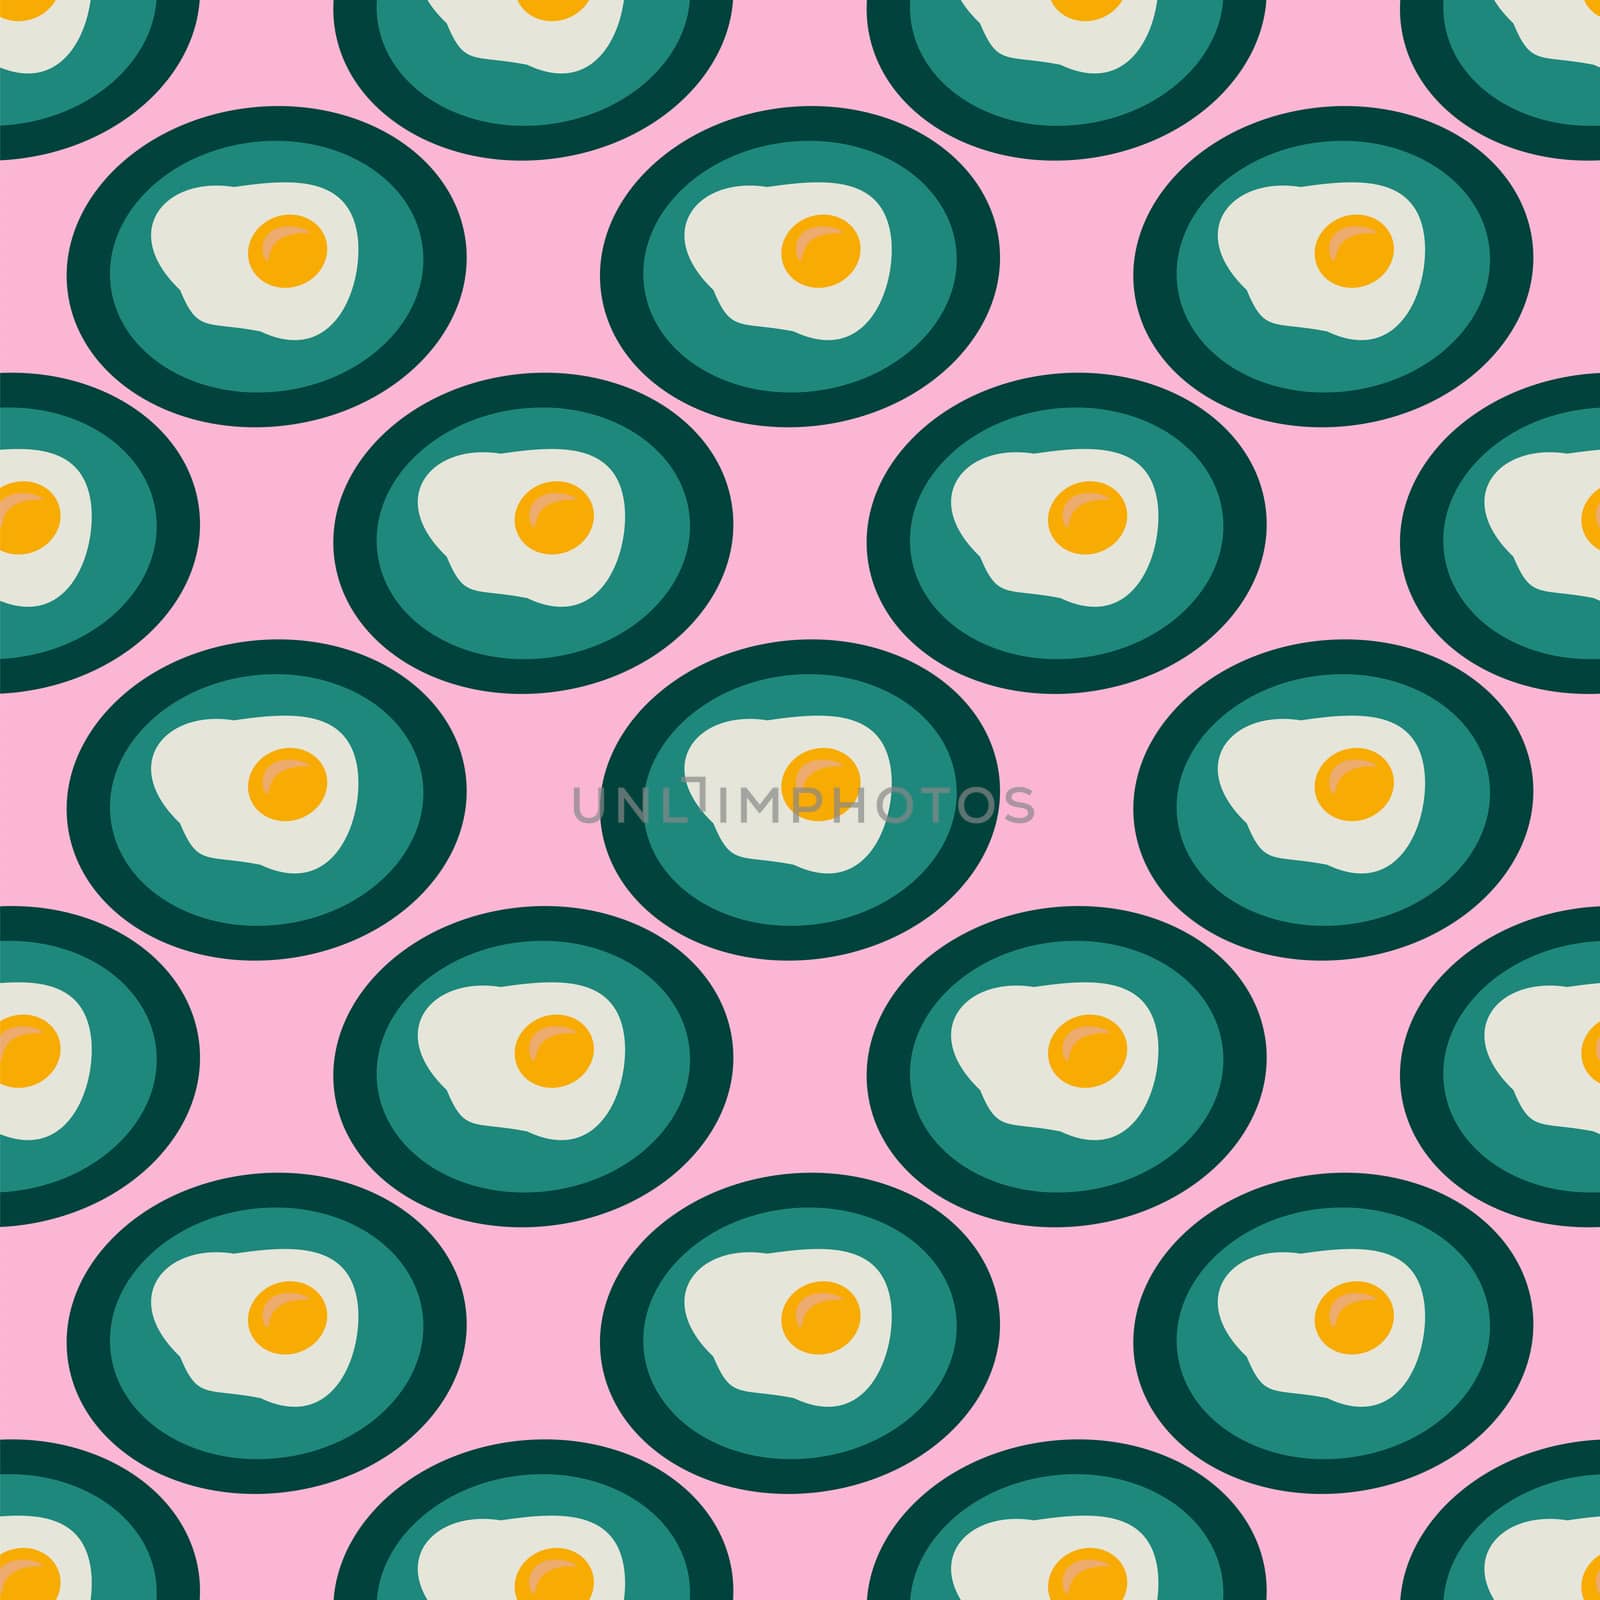 Eggs on plate pattern , illustration, vector on white background